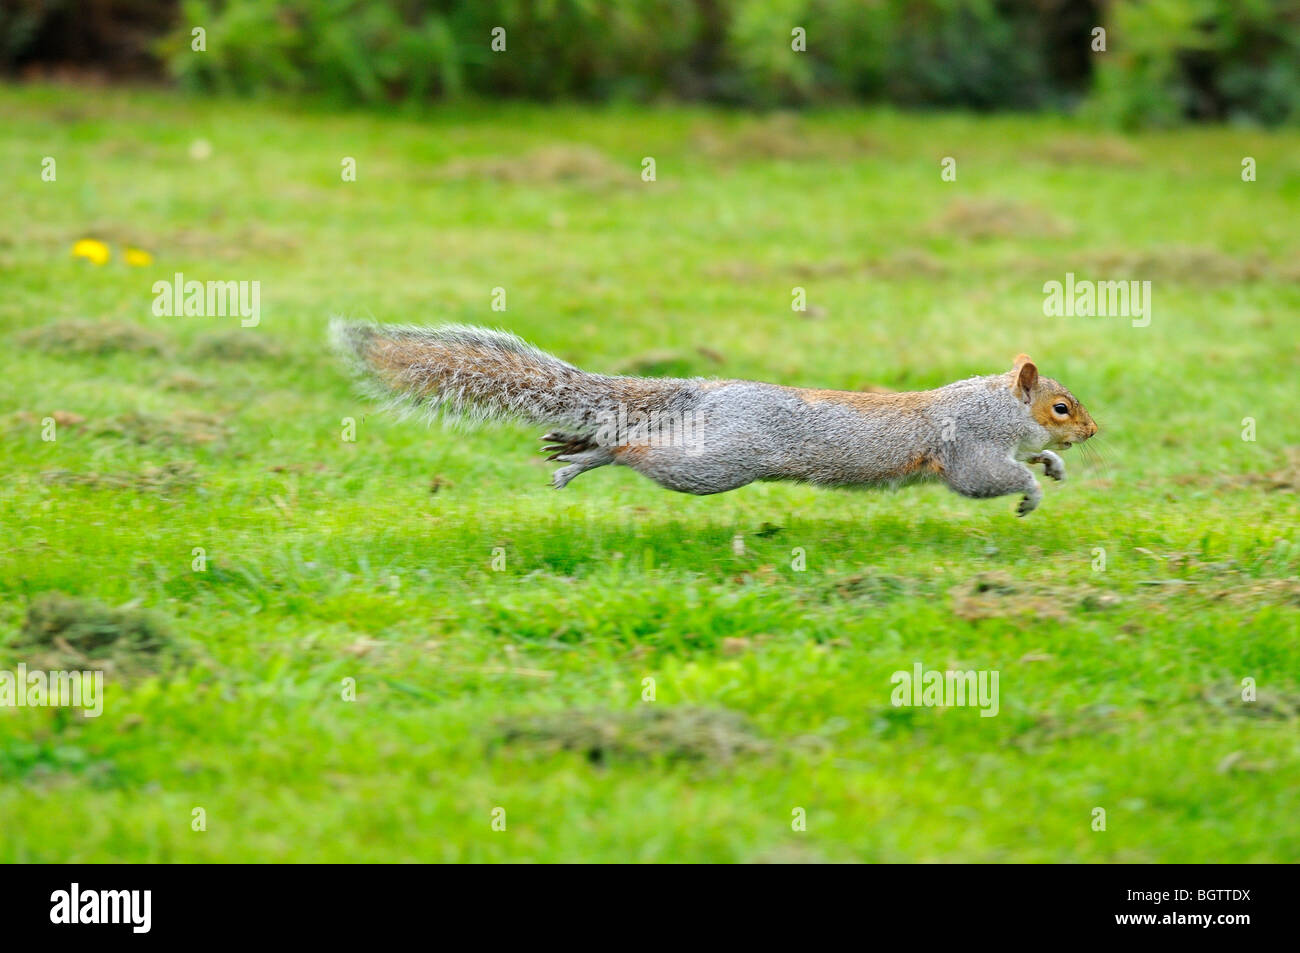 Eastern Grey Squirrel (Sciurus carolinensis) in mid-air, running across grass, Oxfordshire, UK. Stock Photo